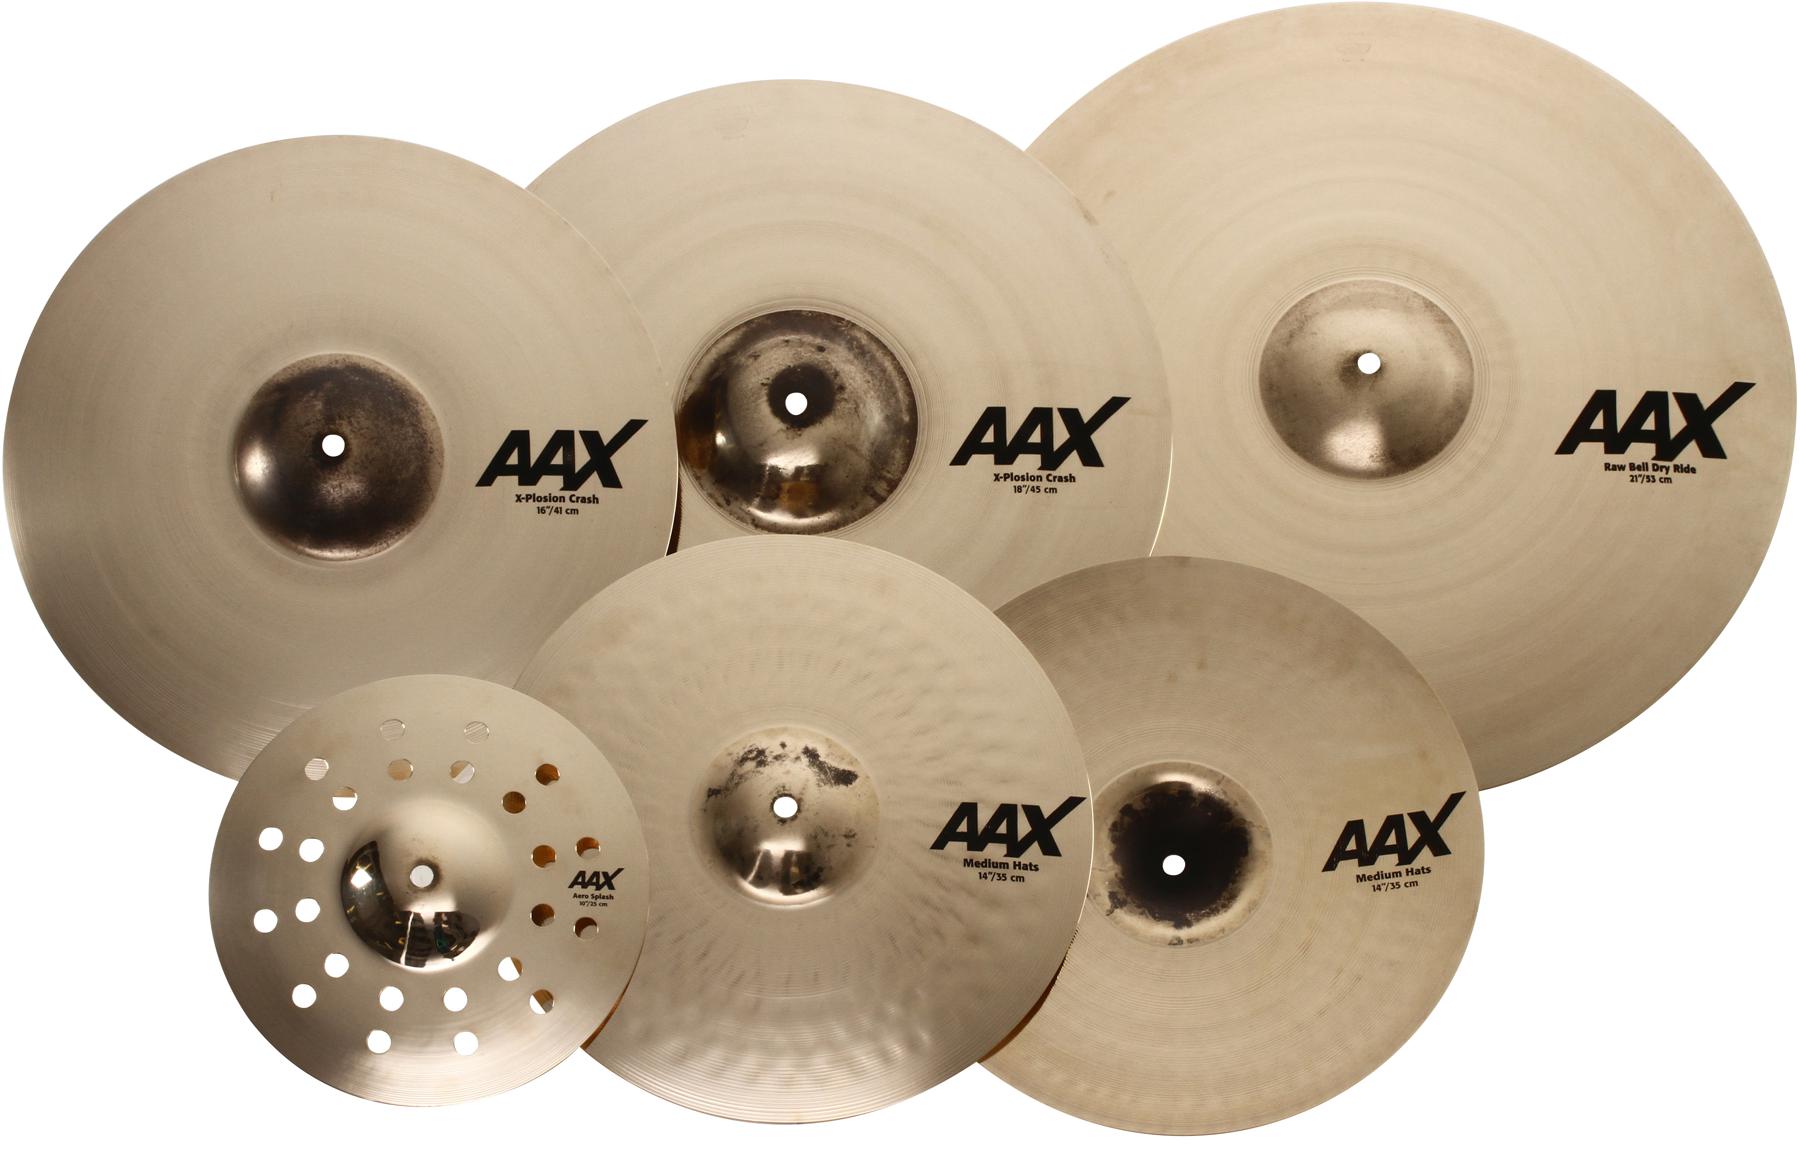 Sabian AAX Praise and Worship Cymbal Set - 14/16/18/21 inch - with Free 10 inch Splash